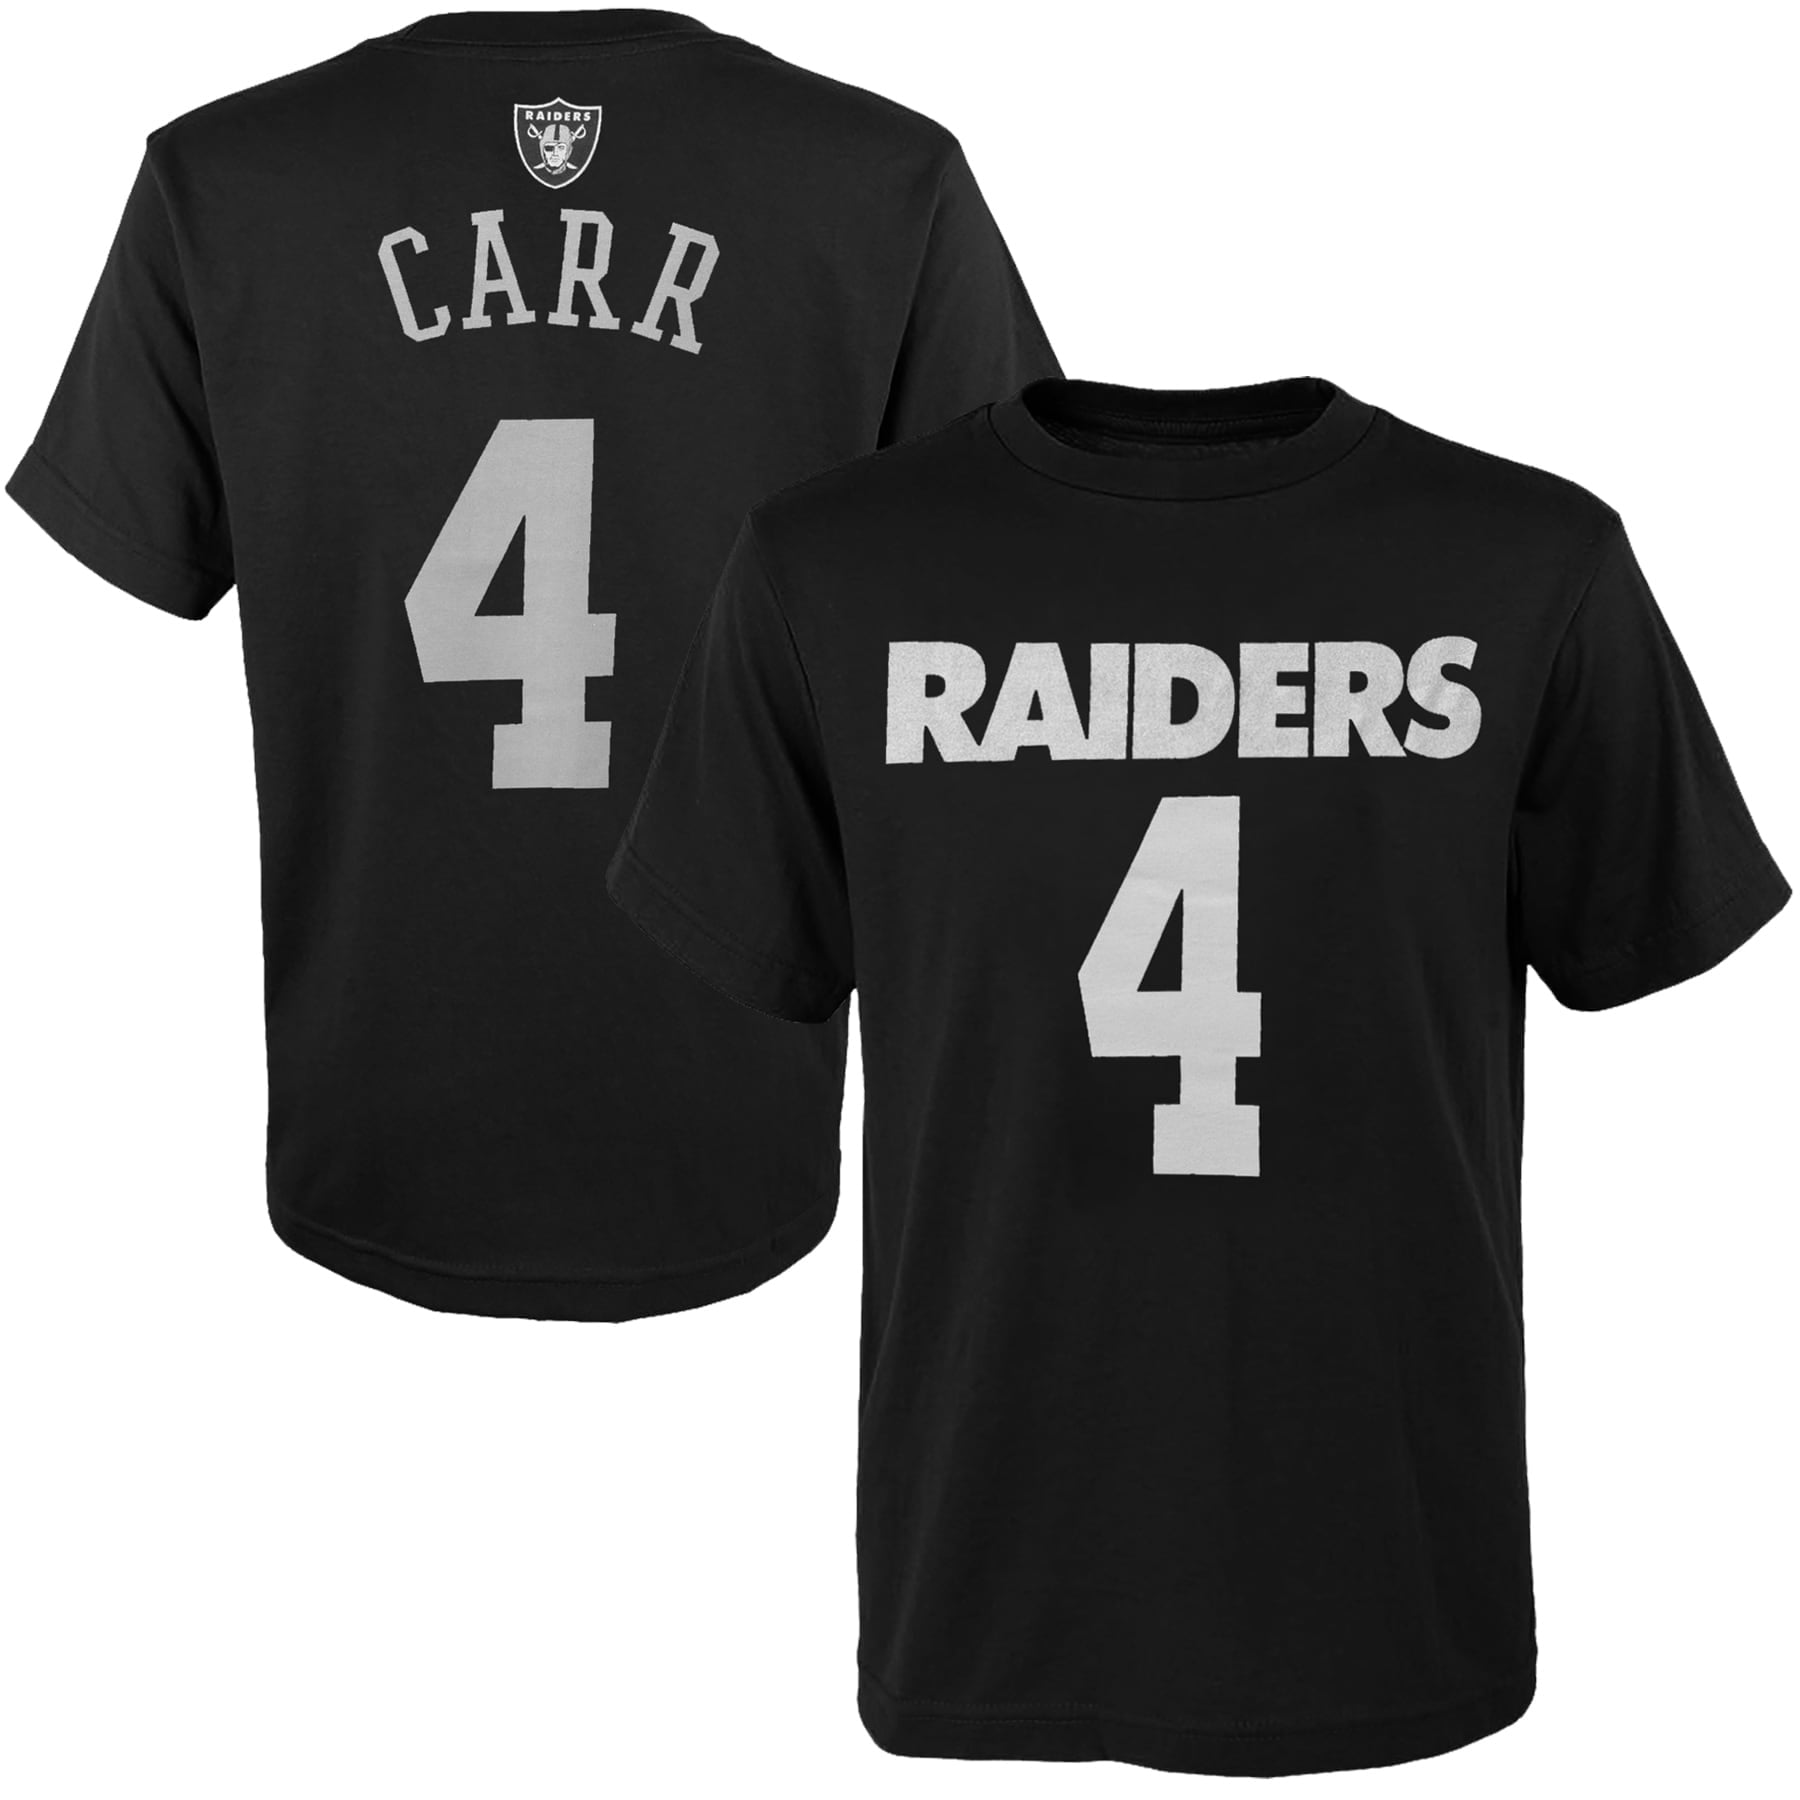 carr raiders shirt